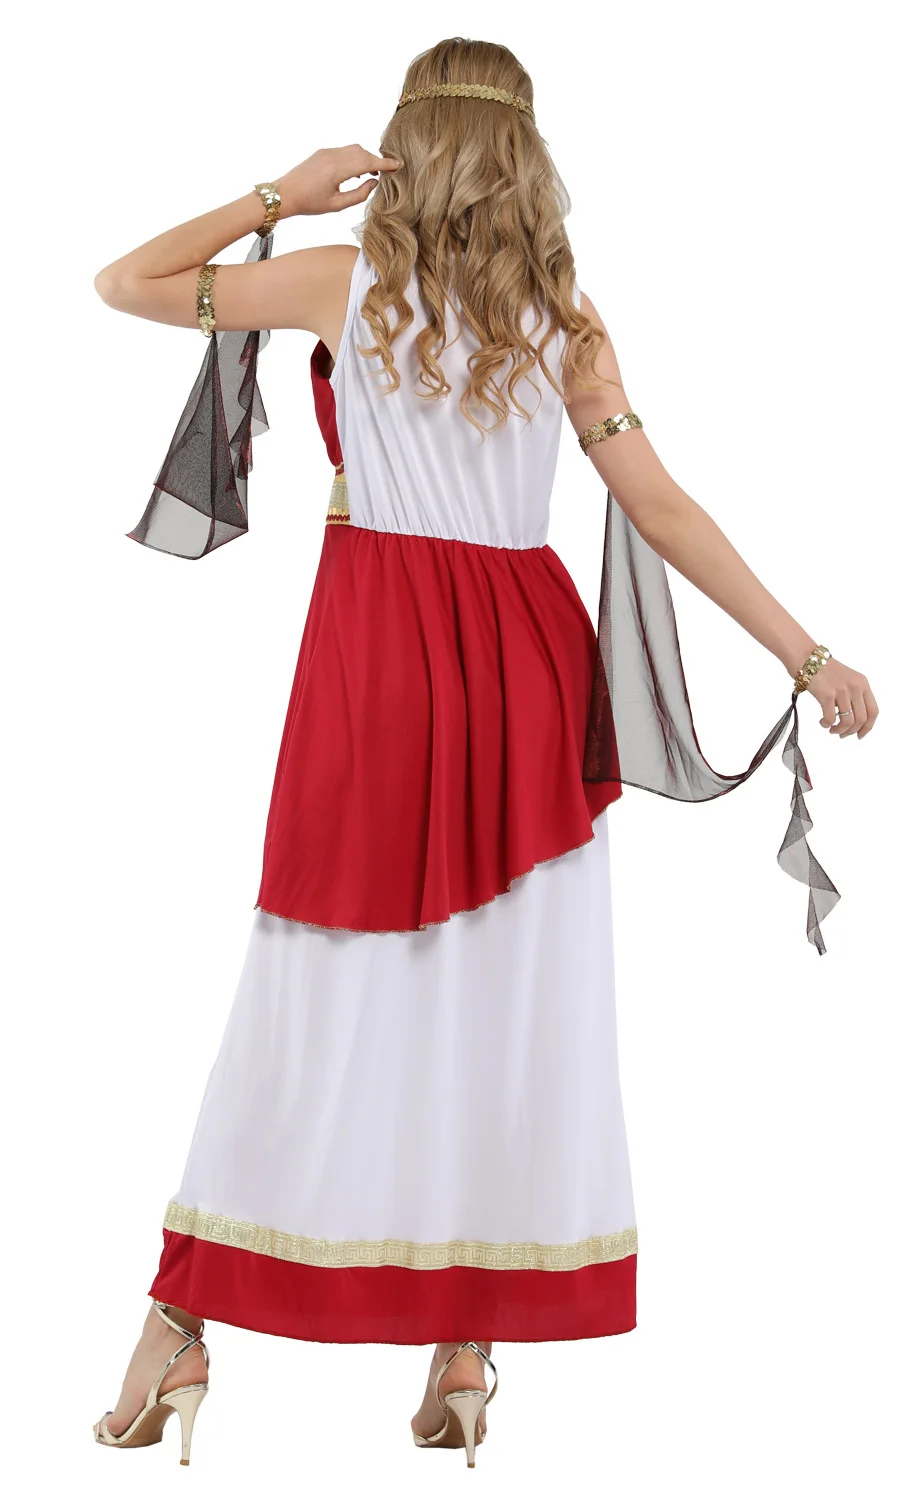 Костюм для Хэллоуина взрослых костюм косплея платье Королева аравийских Пурима